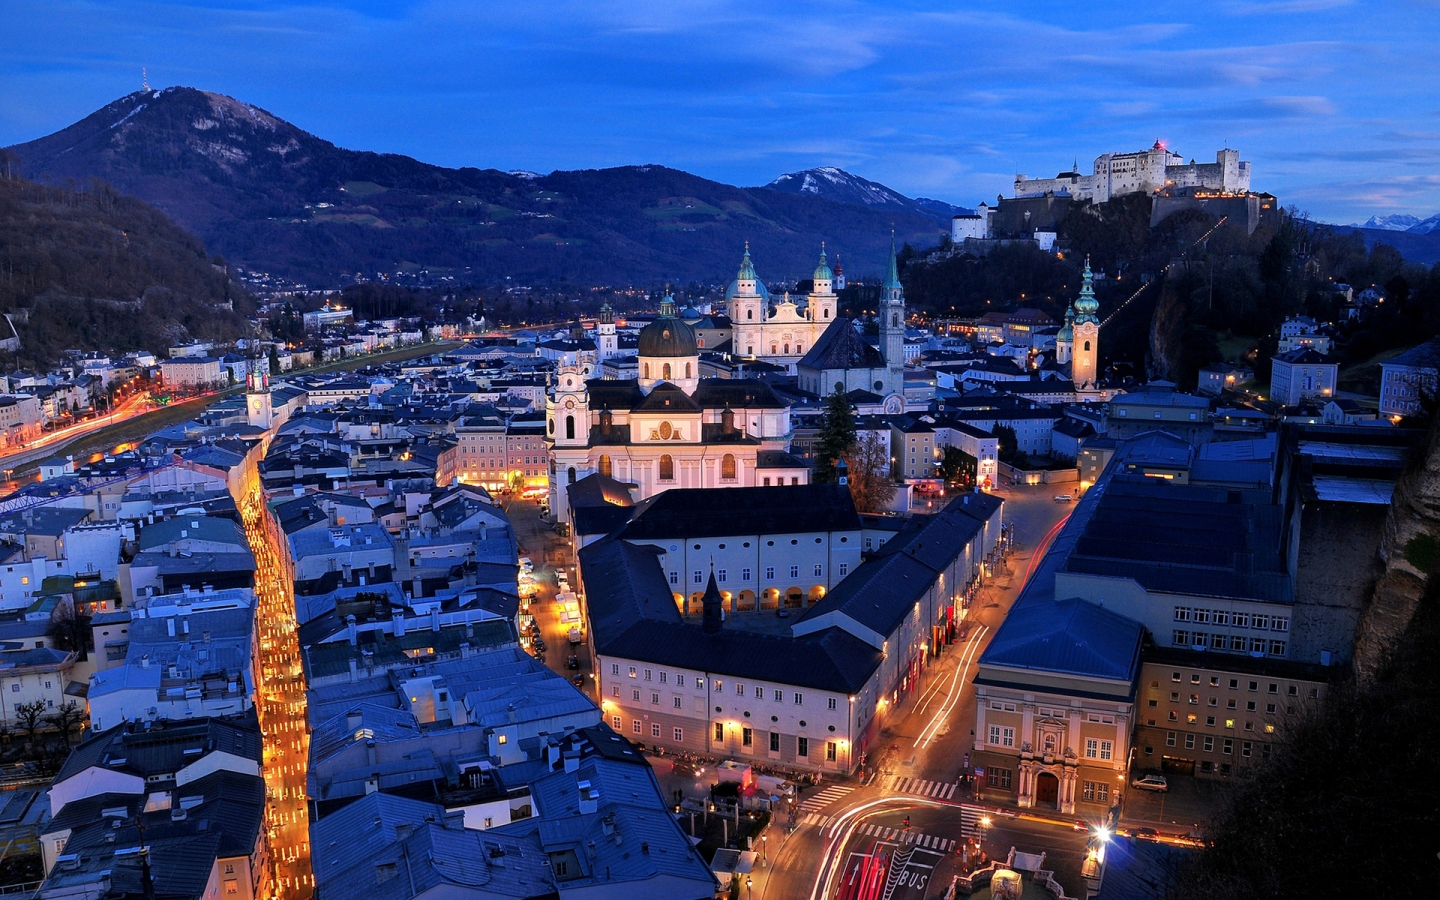 Salzburg Night for 1440 x 900 widescreen resolution